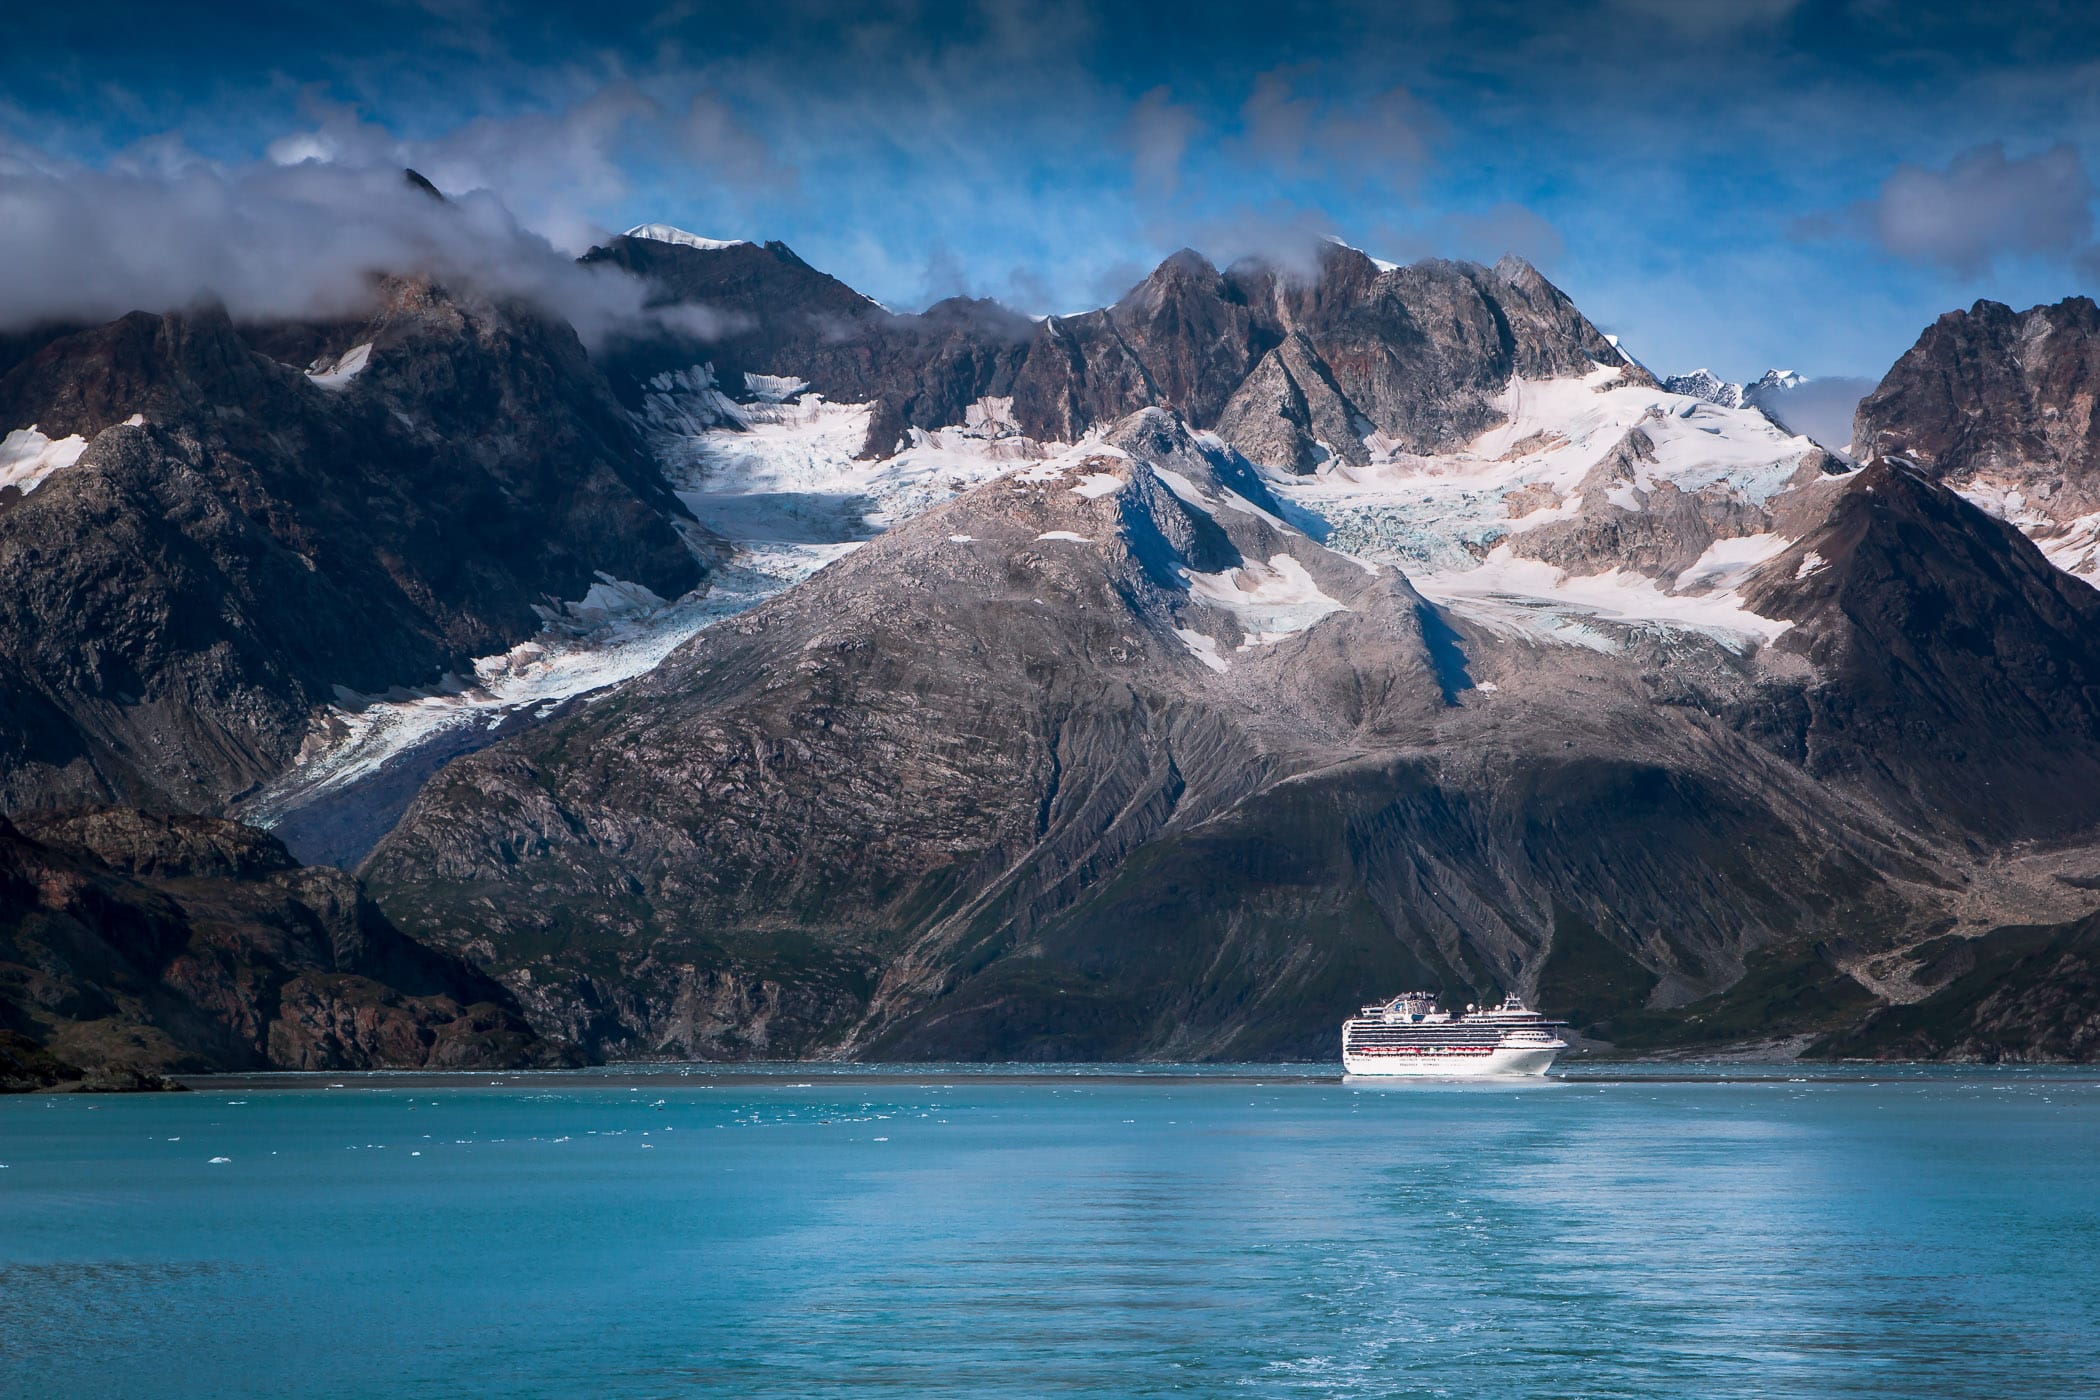 The cruise ship Sapphire Princess sails Glacier Bay in Alaska's Glacier Bay National Park.